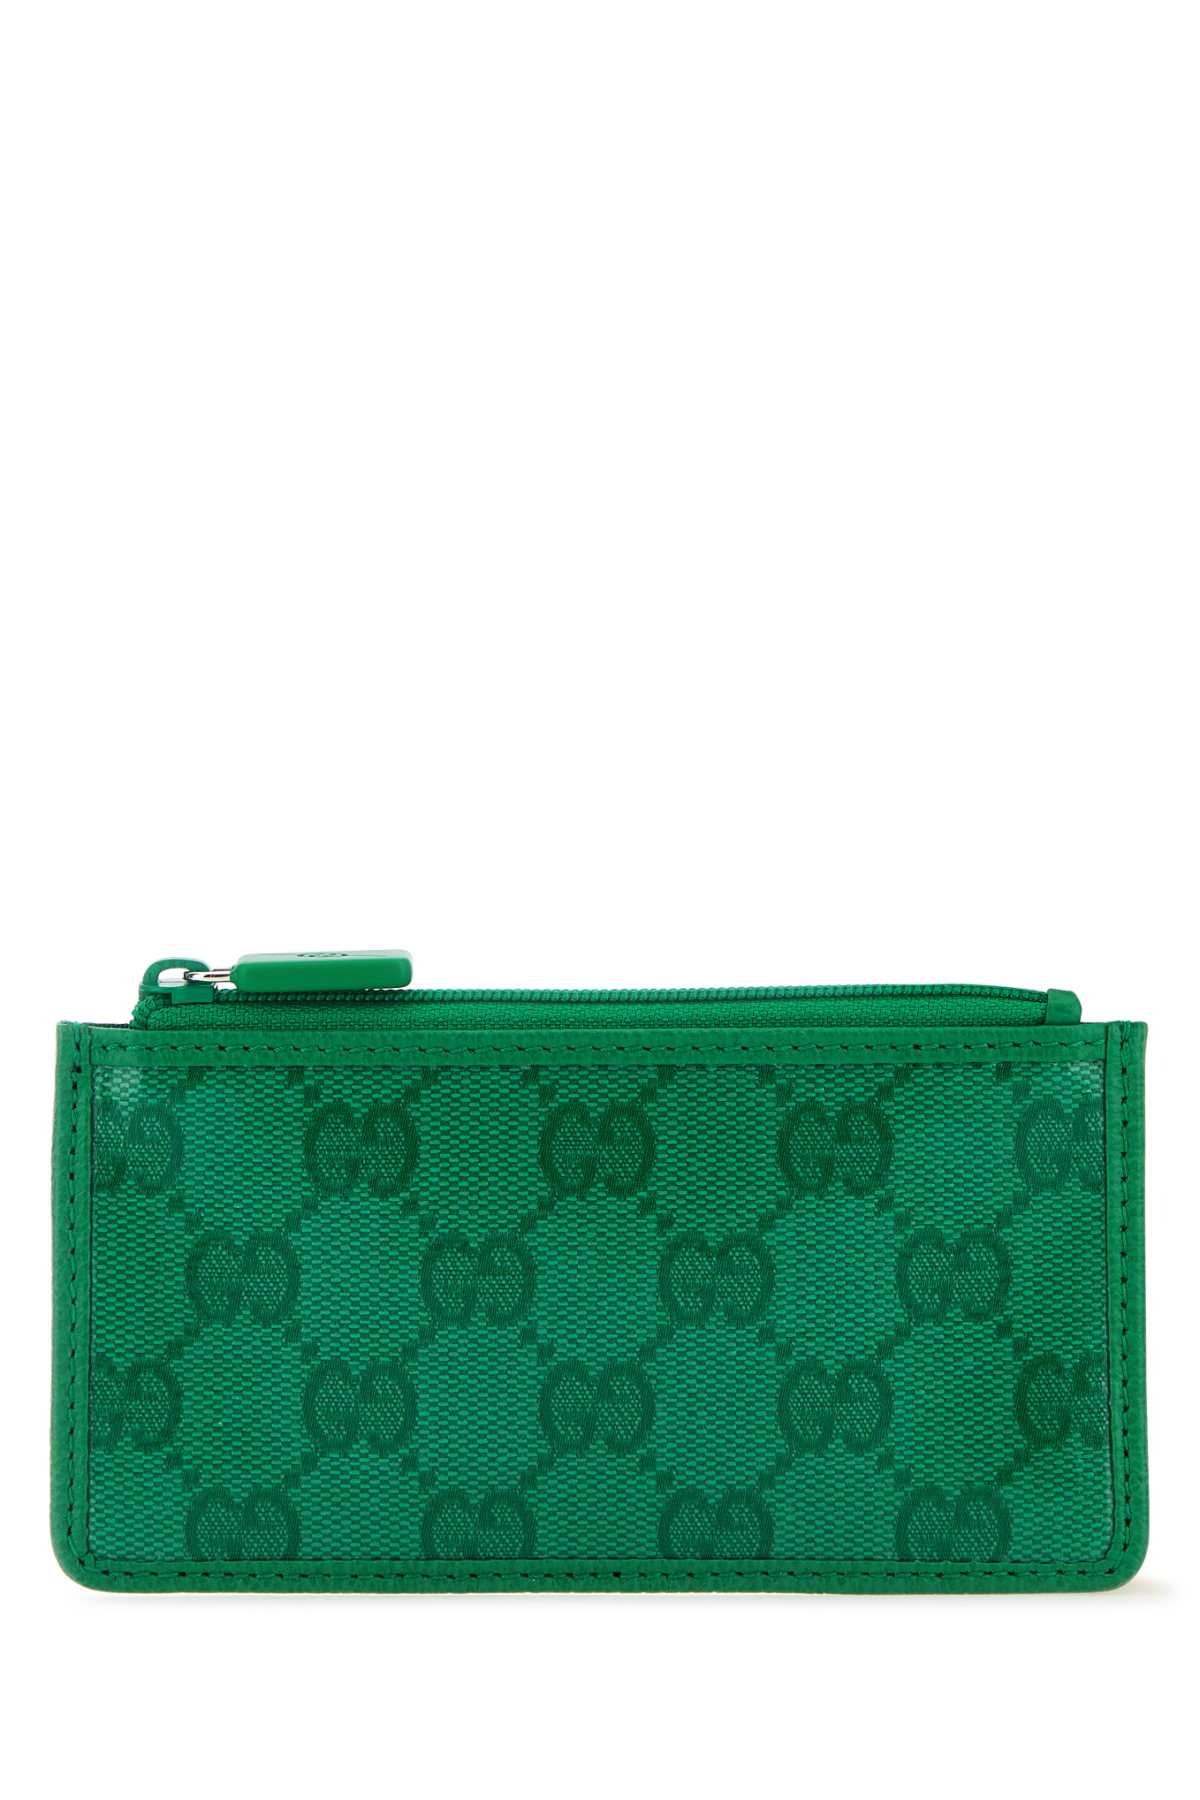 Shop Gucci Grass Green Gg Crystal Fabric Card Holder